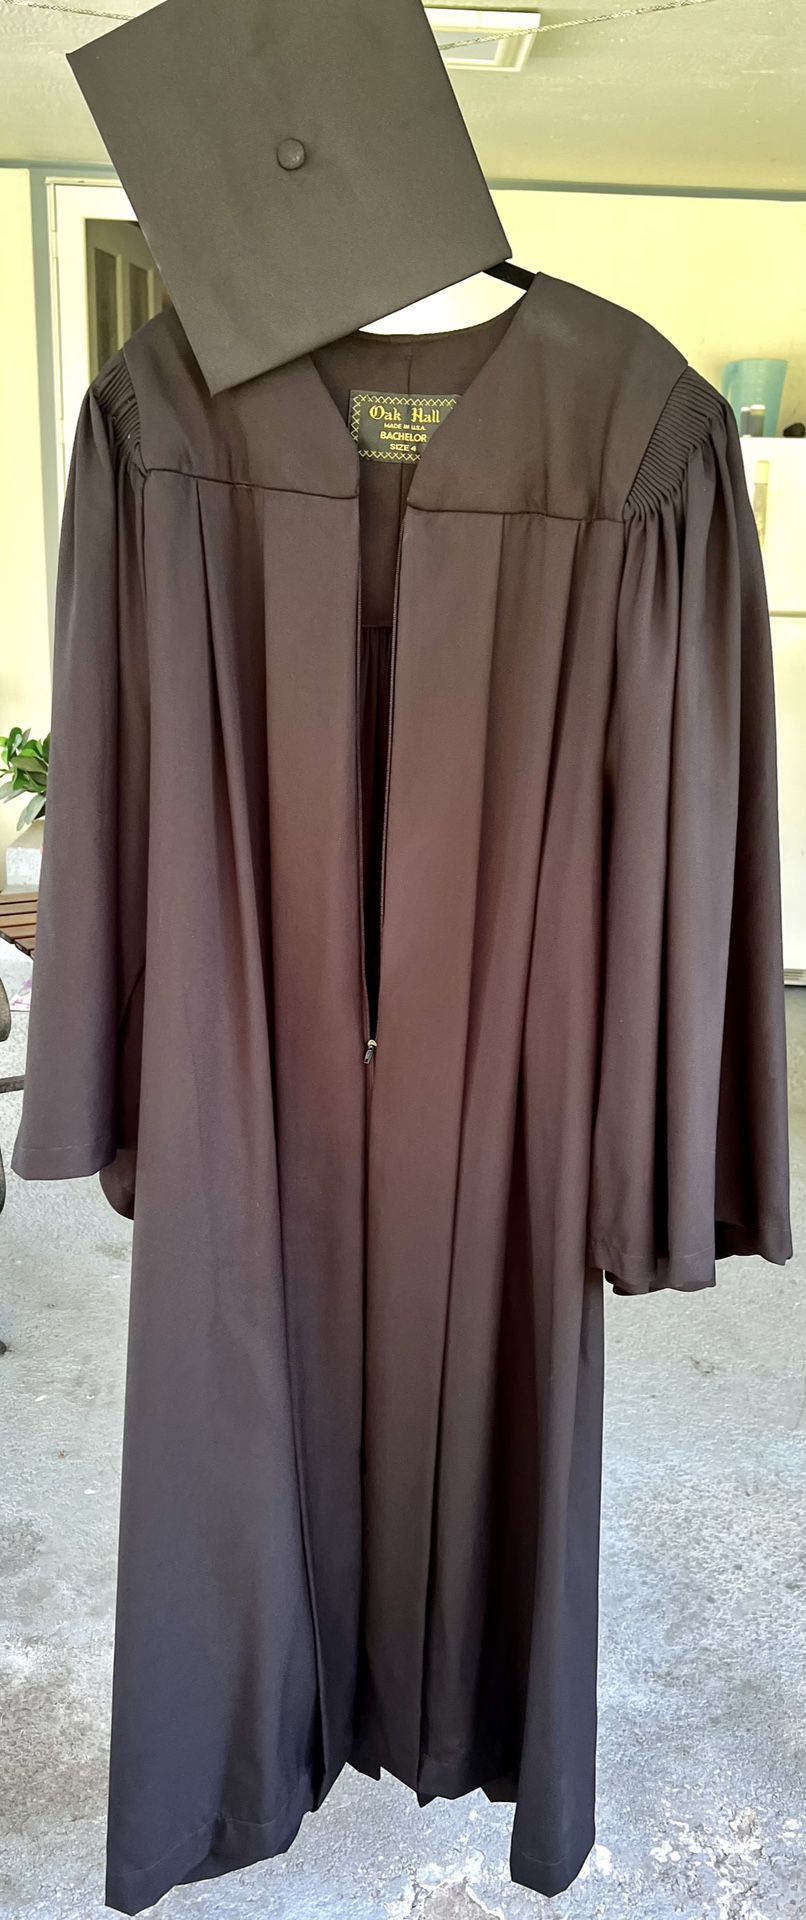 Graduation cap and gown black size 4